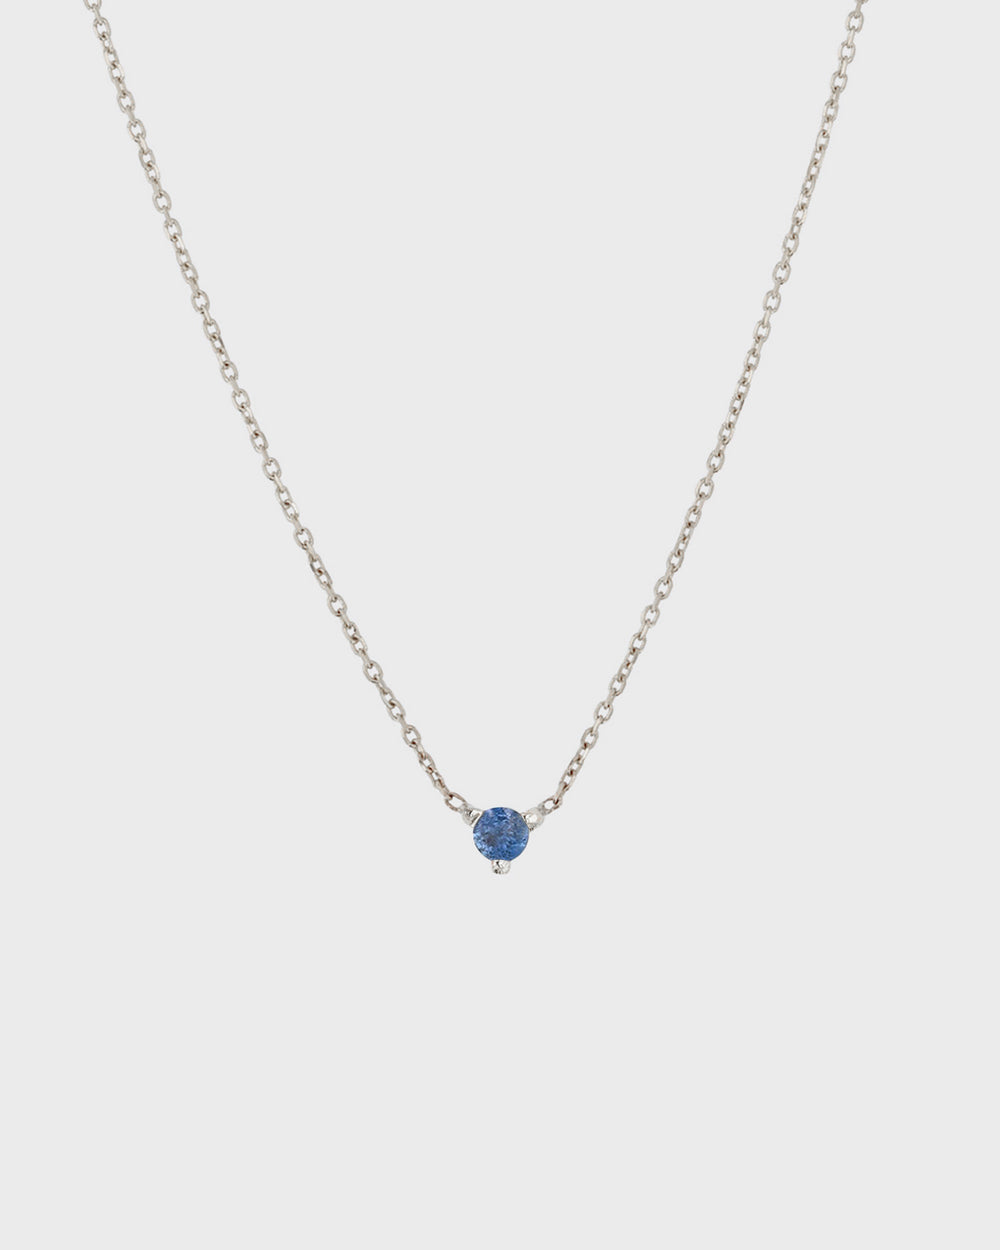 The Petite Sapphire Birthstone Necklace by Sarah & Sebastian